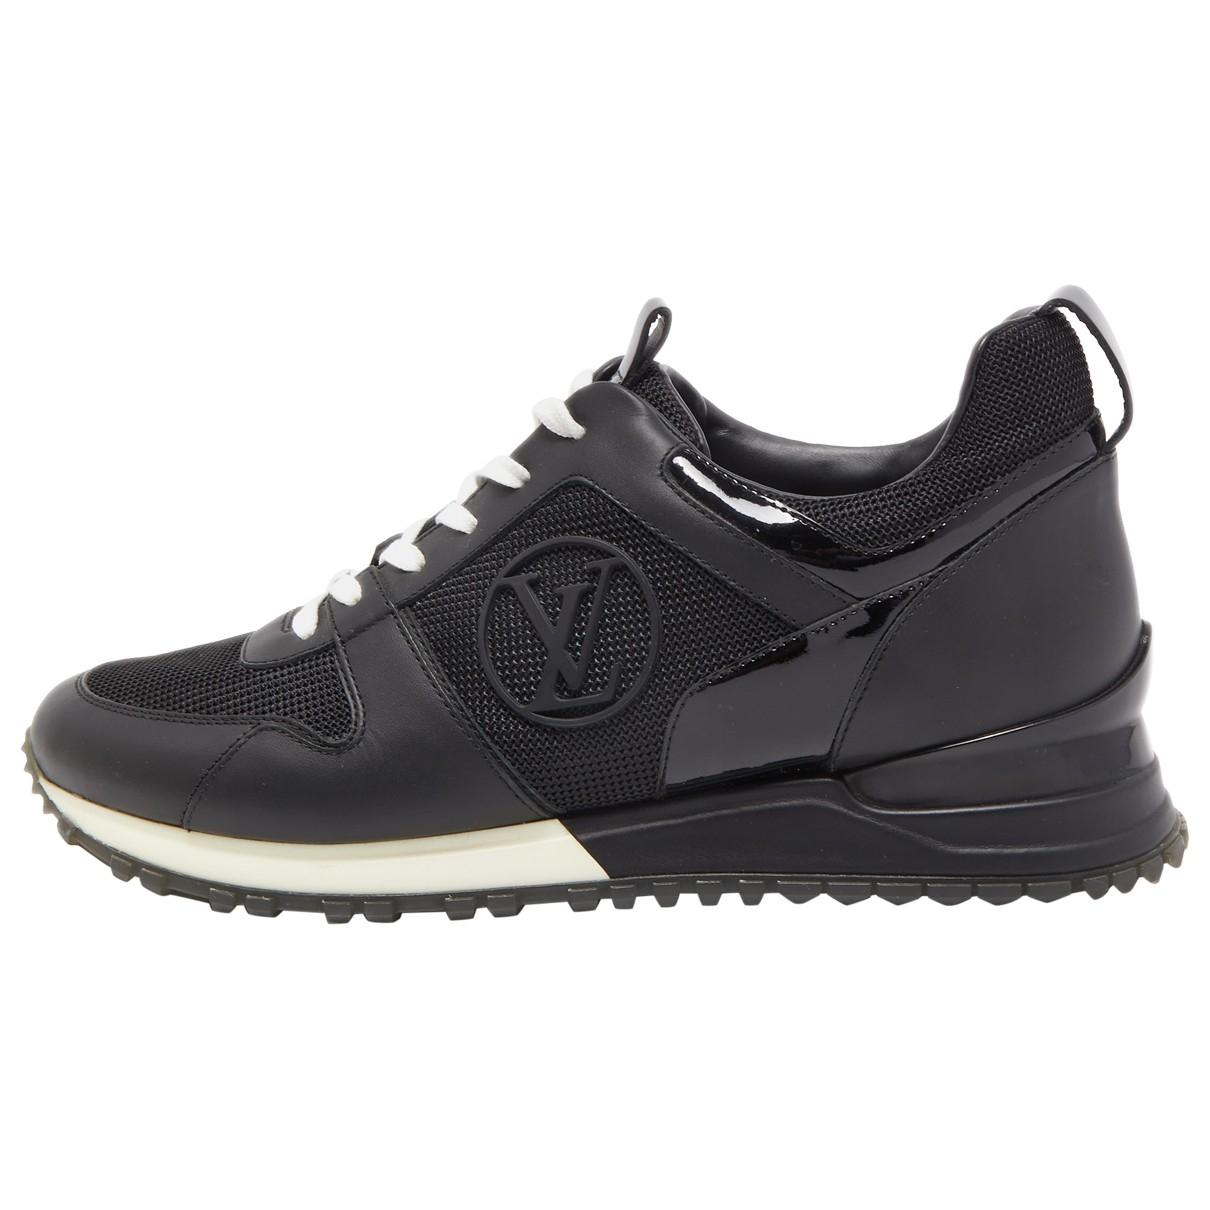 LOUIS VUITTON Women's Black Run Away Sneakers Size 41 US 11 AUTHENTIC😍